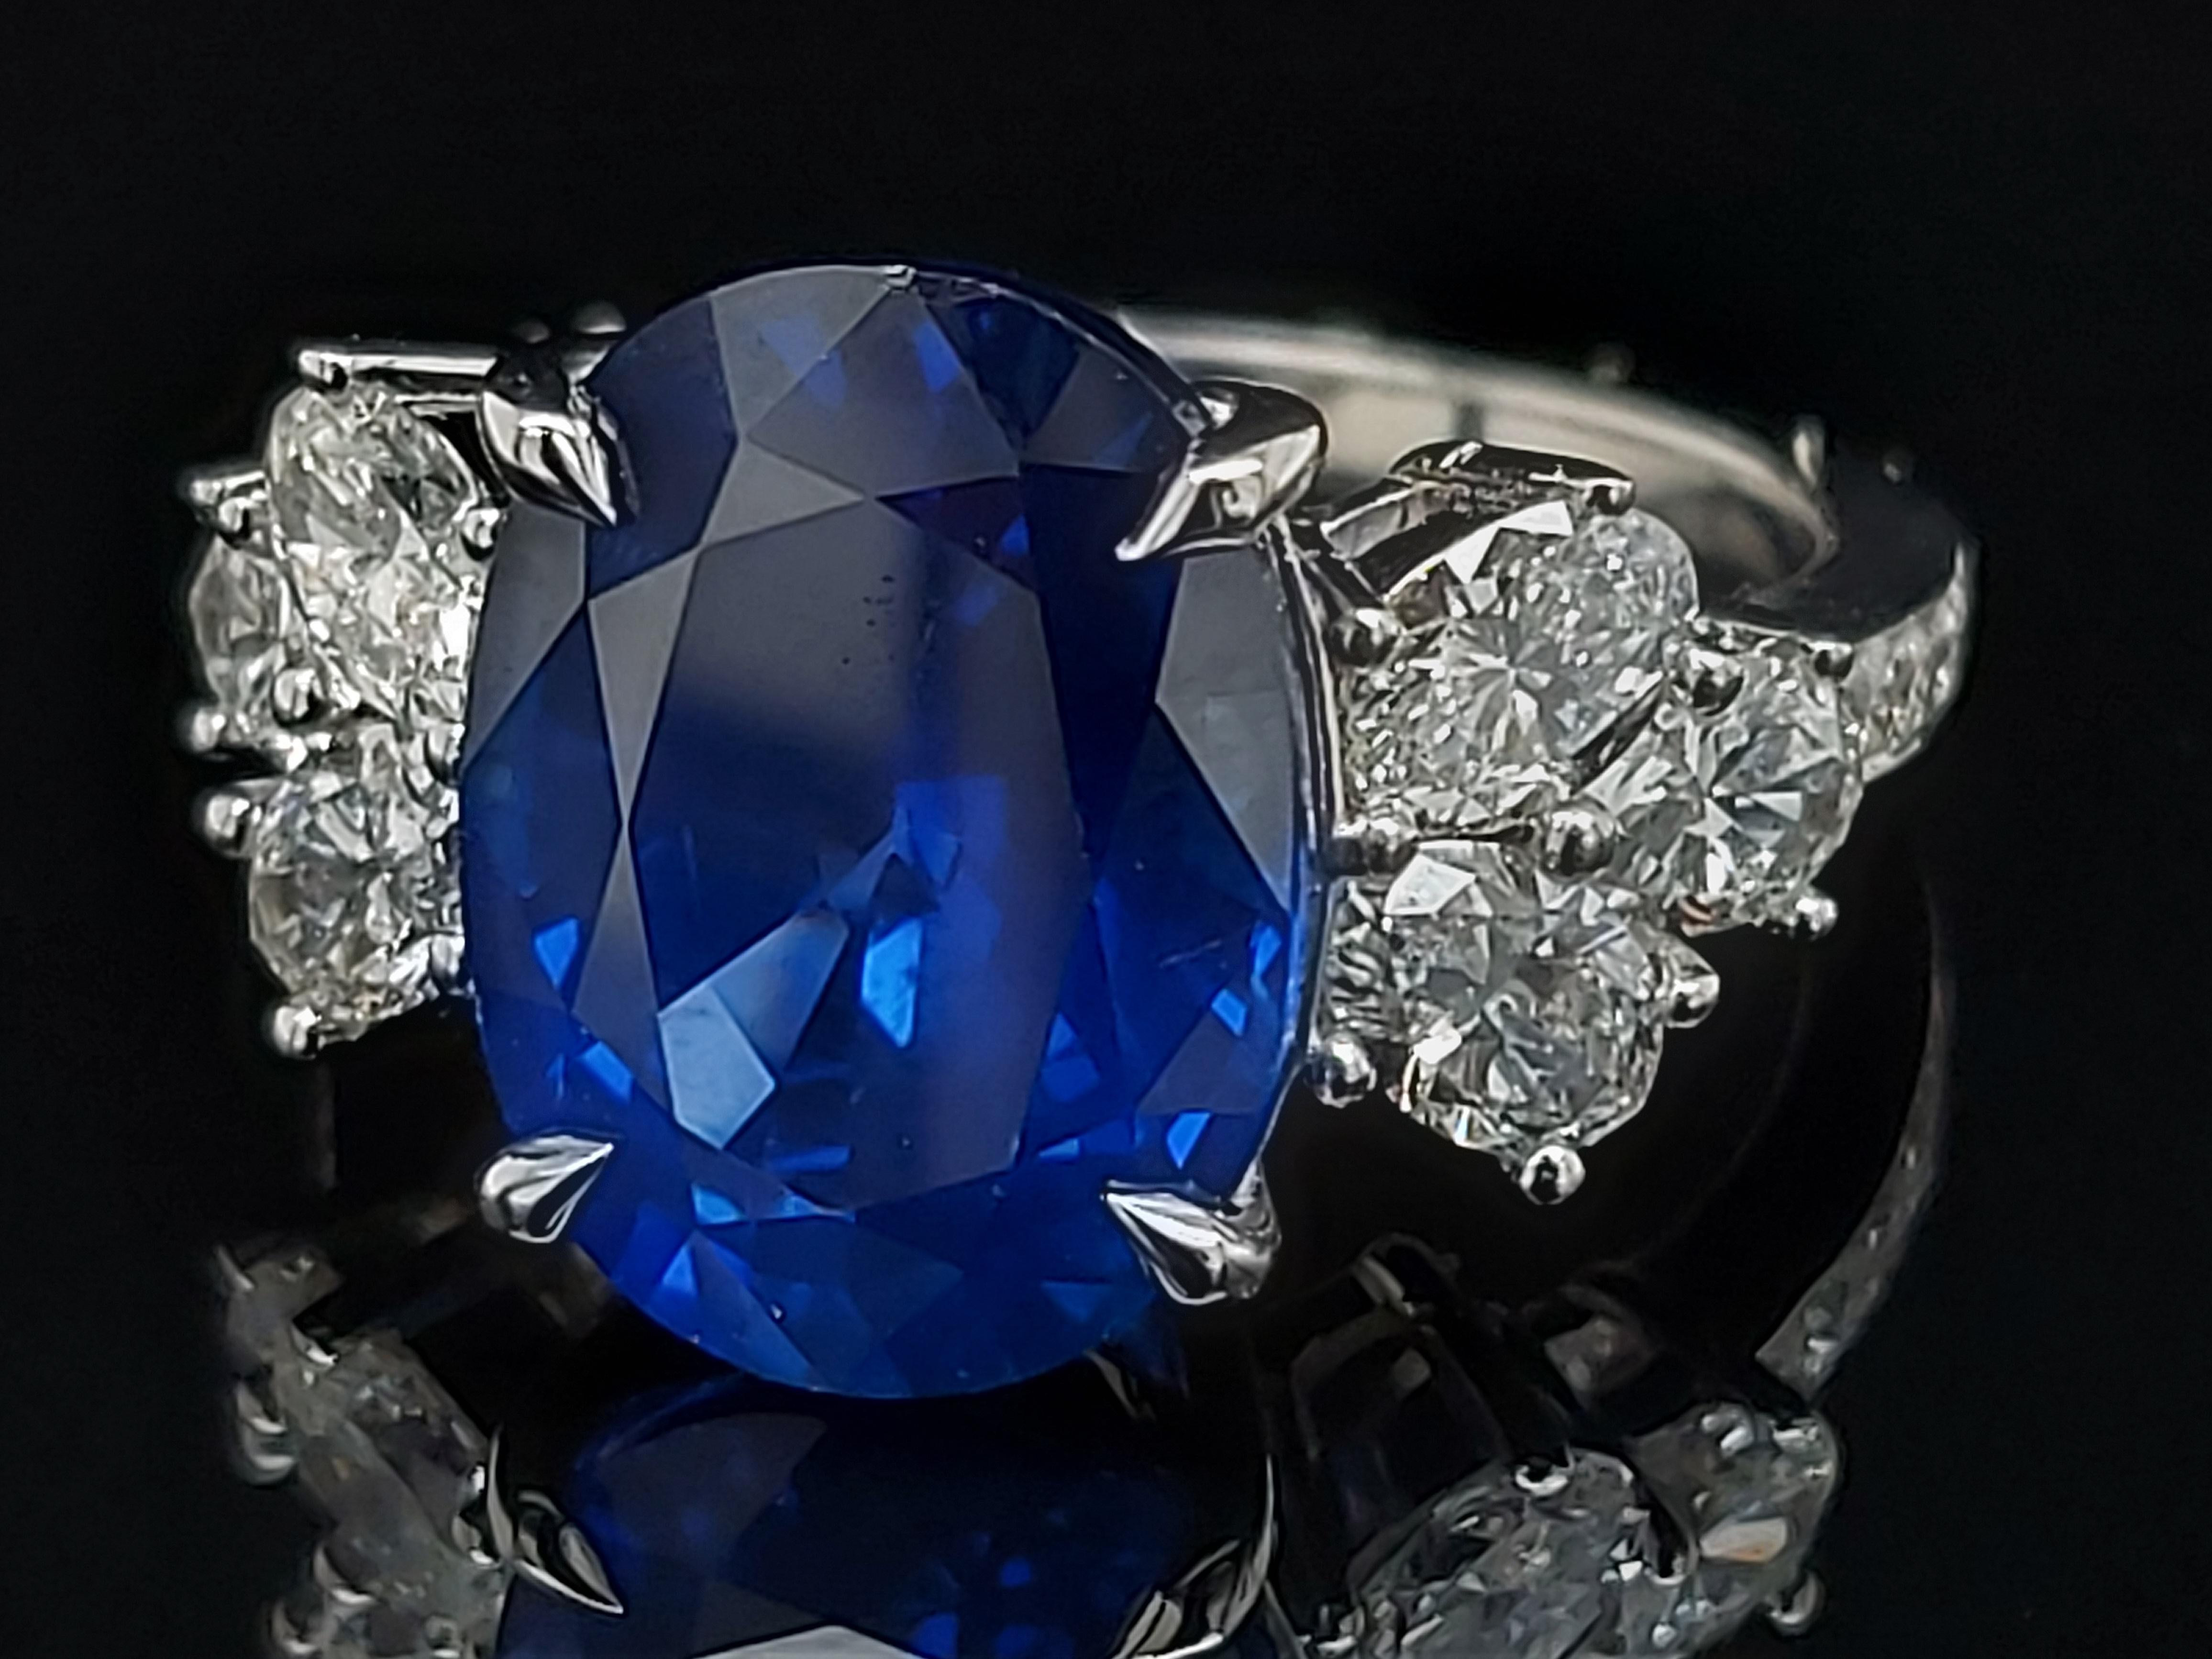 Stunning 18 kt White Gold Ring Set With A 7 carat Sapphire & Diamonds

Sapphire: 7 ct , 13.18mm*9.66mm*6.61mm

Diamonds: 6 Oval cut diamonds, 10 brilliant cut diamonds

Material: 18kt white gold

Total weight: 6.9 gram / 0.245 oz / 4.4 dwt

Ring